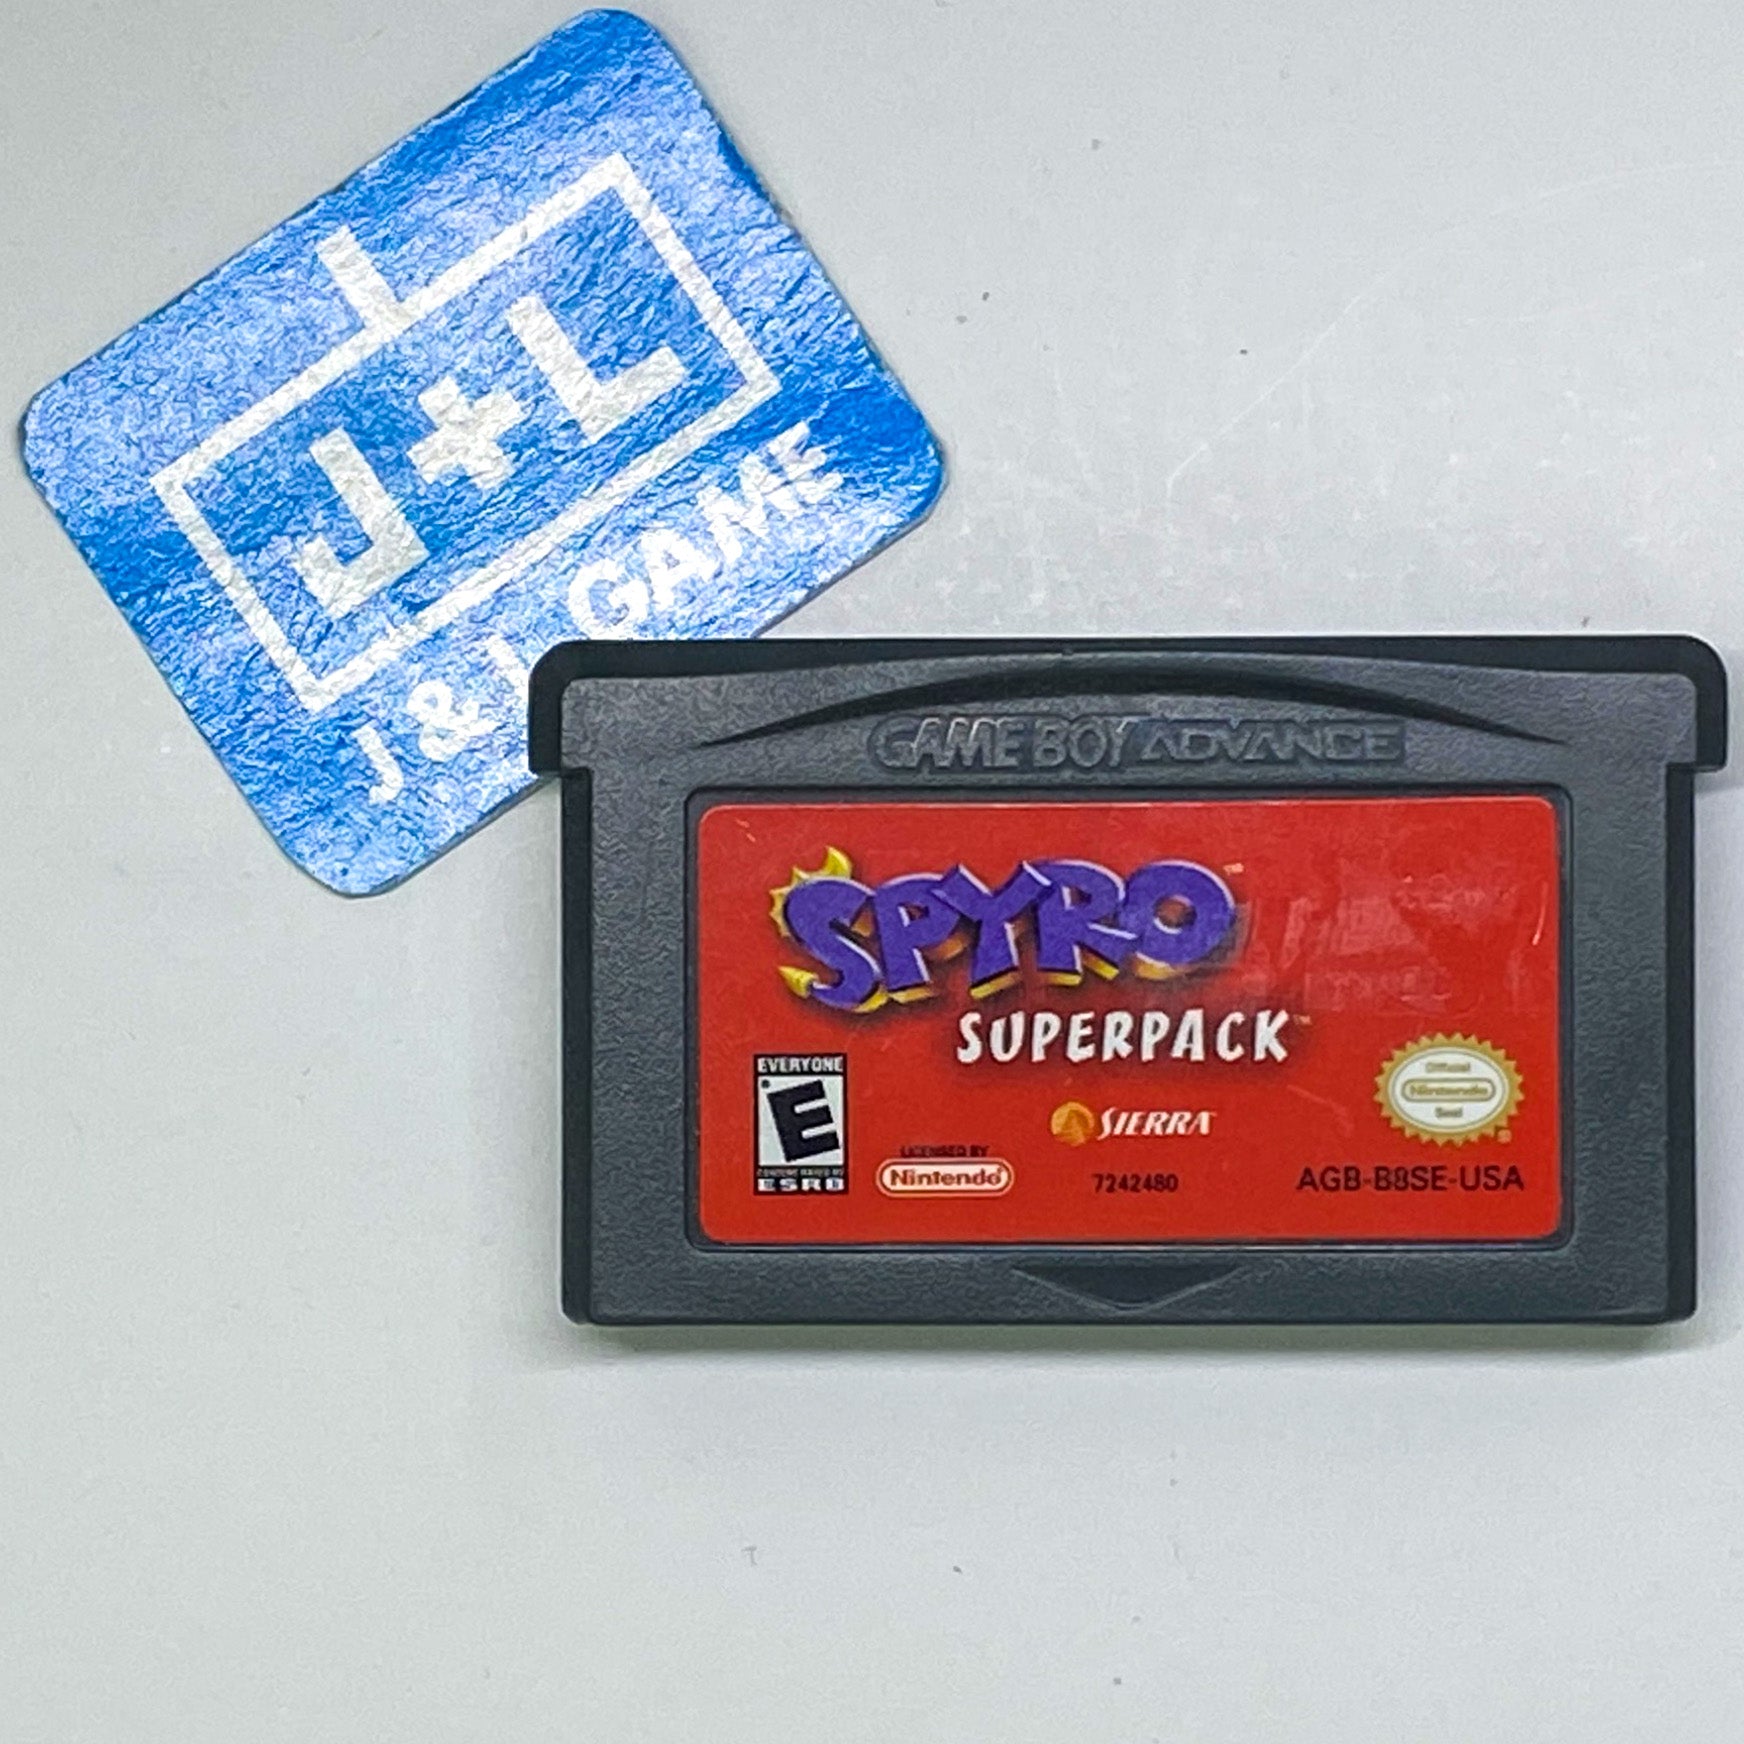 Spyro Superpack: Spyro: Season of Ice / Spyro 2: Season of Flame - (GBA) Game Boy Advance [Pre-Owned] Video Games Sierra Entertainment   